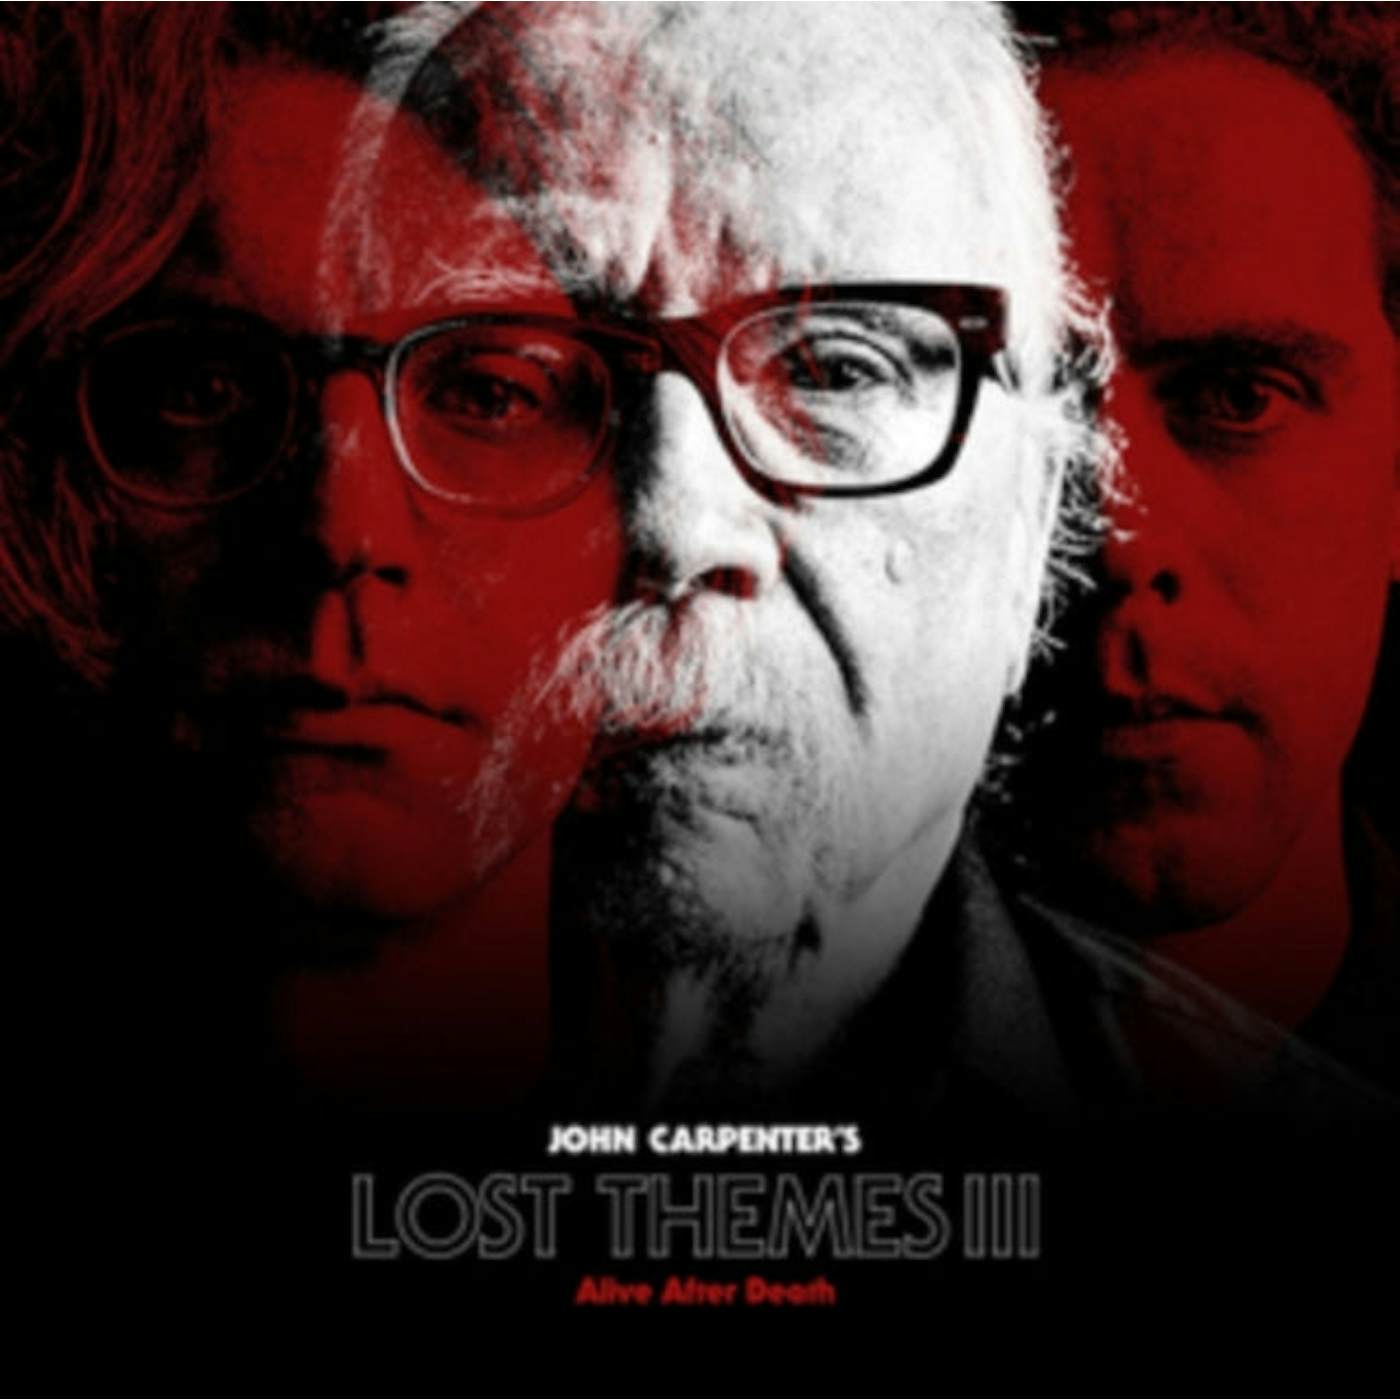 John Carpenter LP Vinyl Record - Lost Themes Iii (Red Vinyl) (Indies Only)